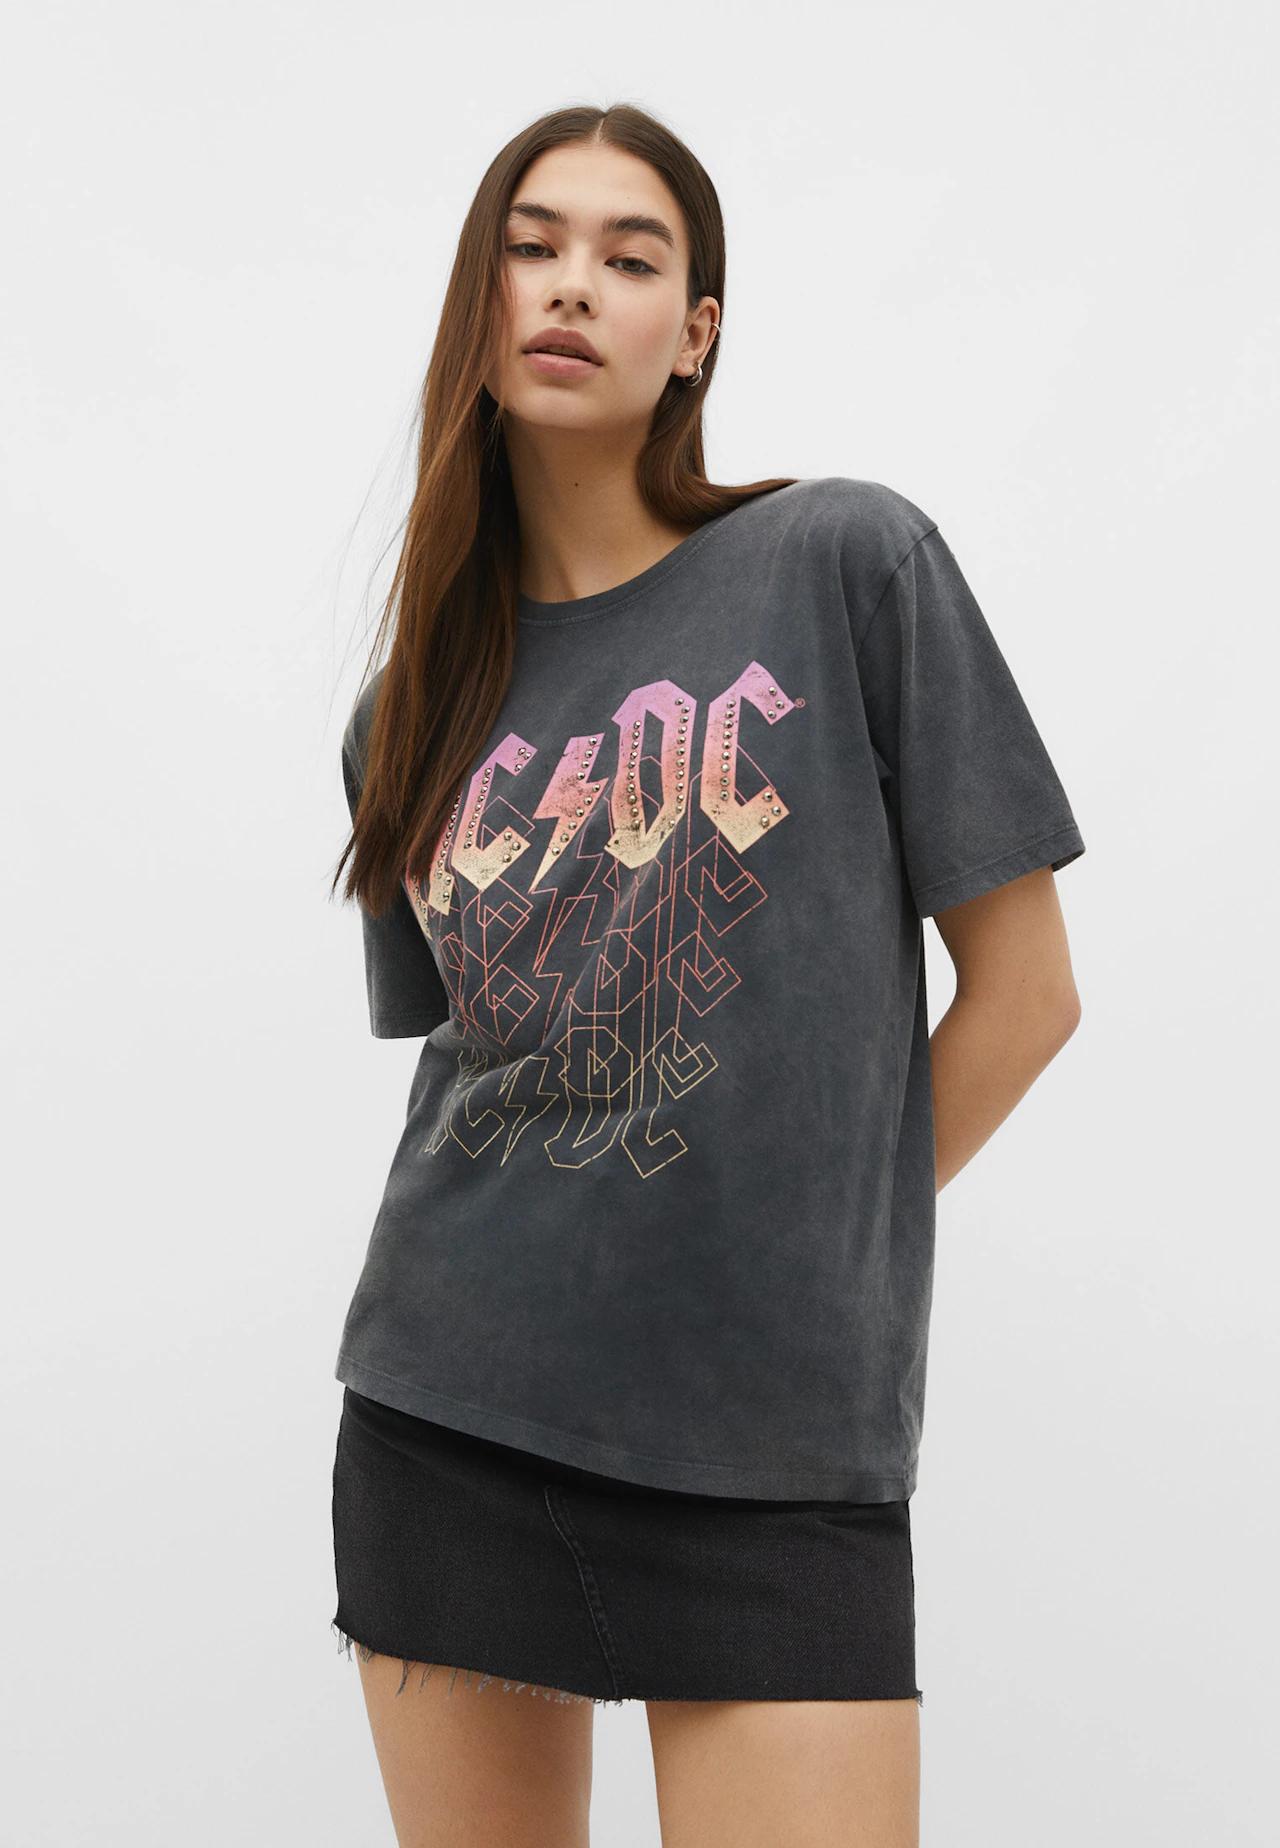 AC/DC T-shirt - Women's fashion | Stradivarius United States